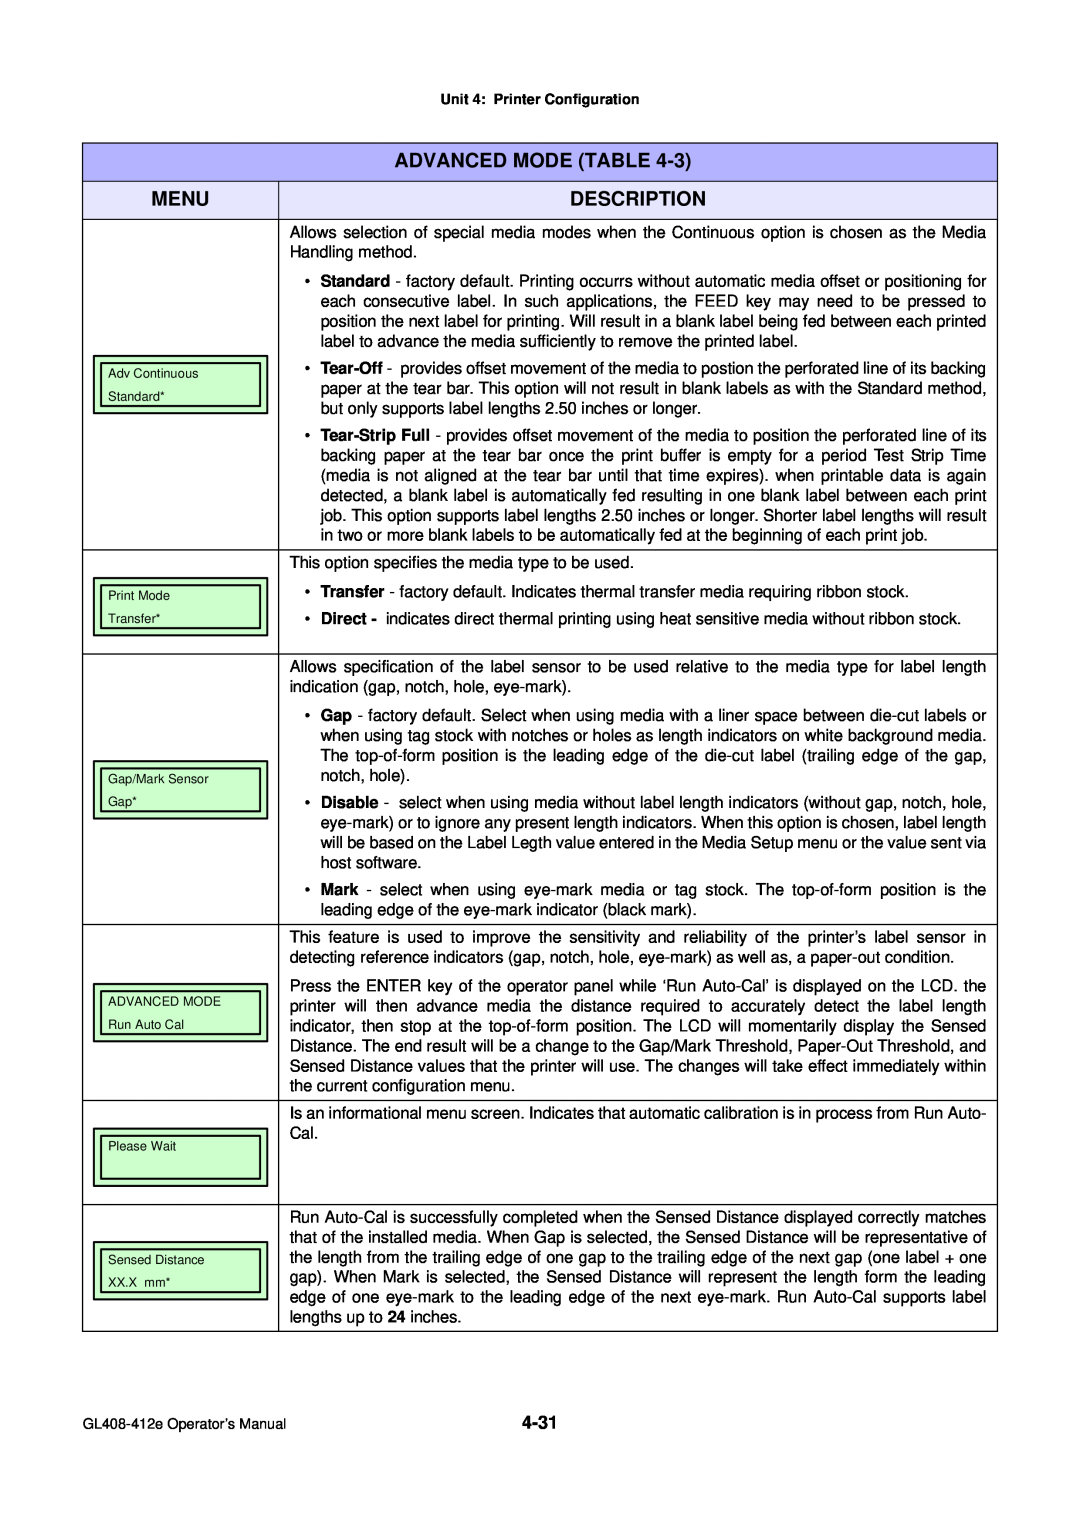 SATO GL4XXE manual Advanced Mode Table, Menu, Description, Handling method 